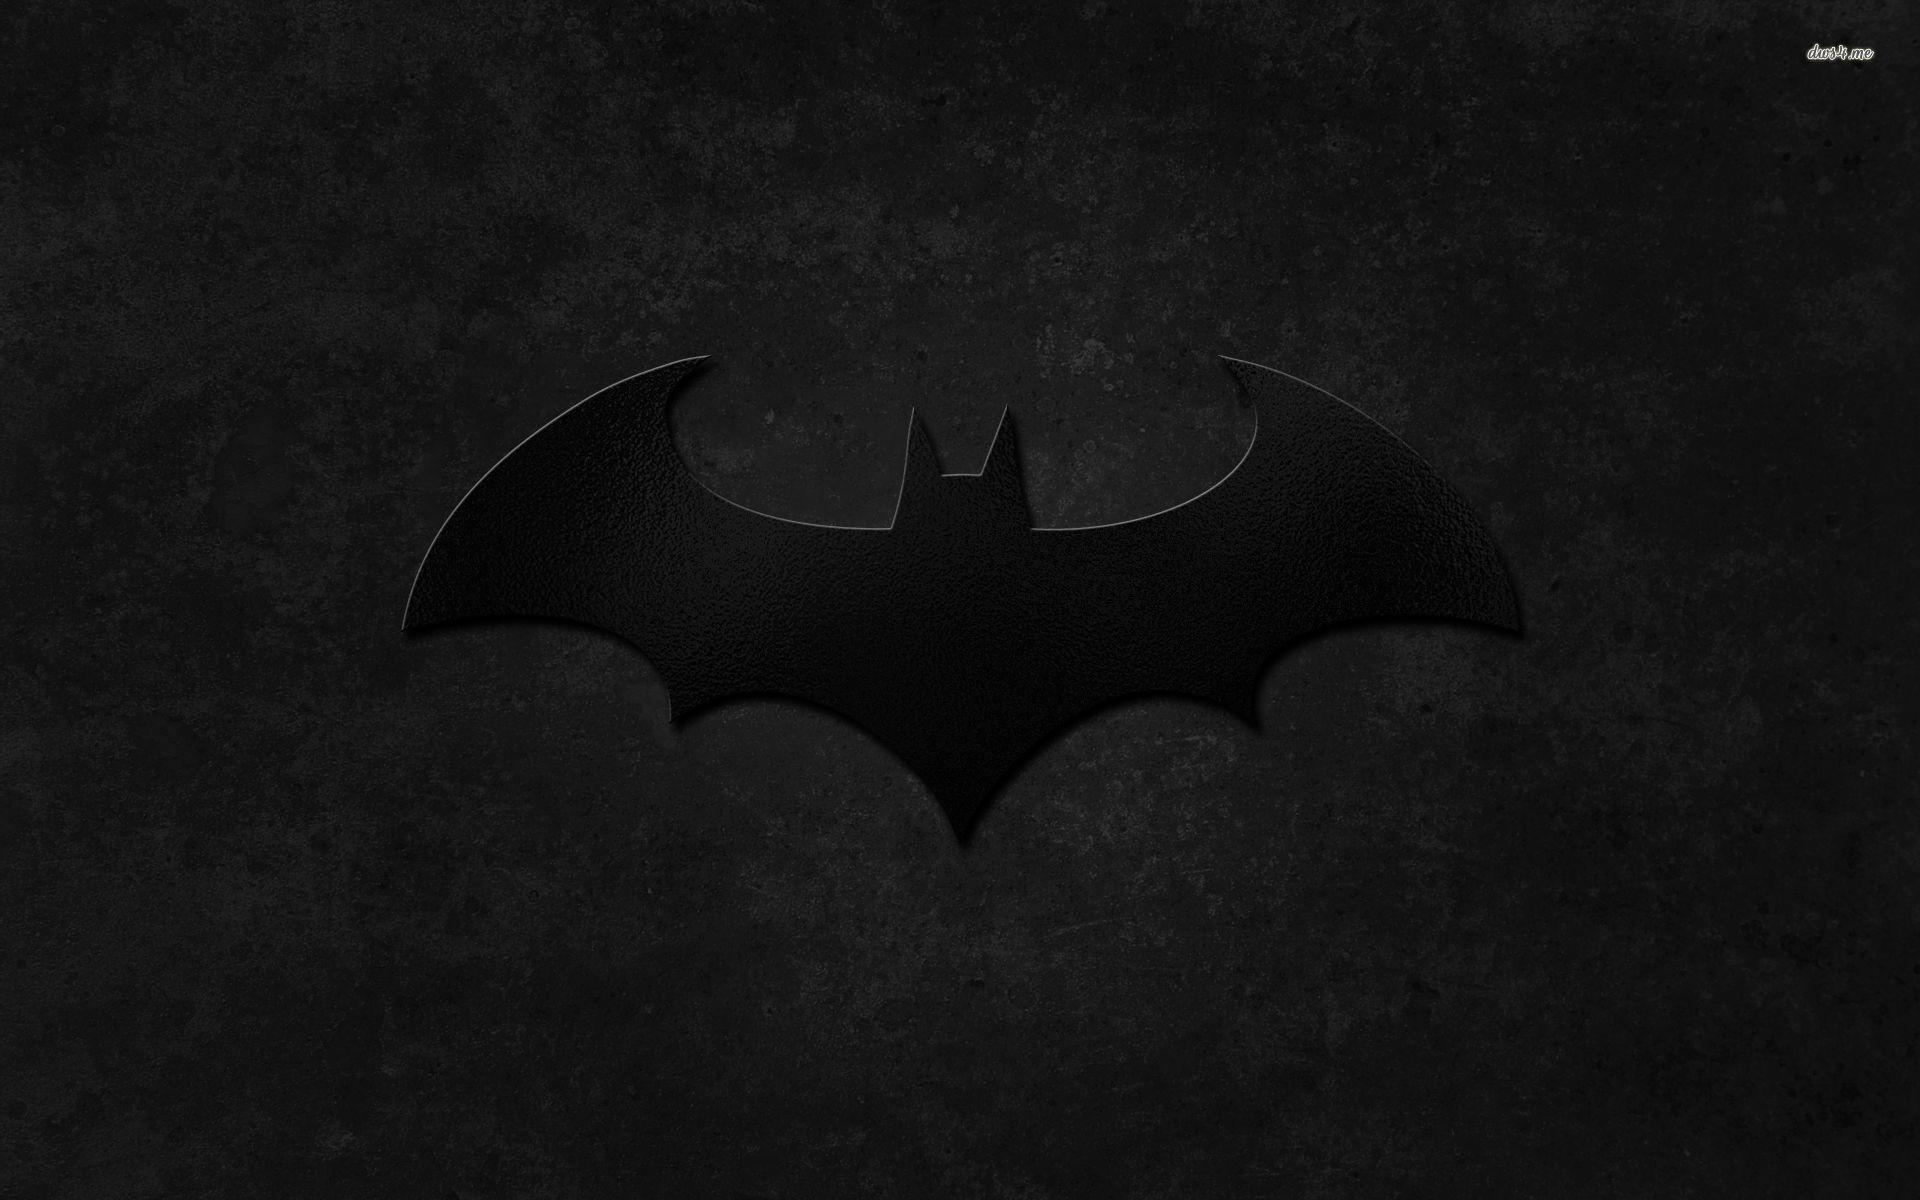 Batman Logo Black Wallpapers - Top Free Batman Logo Black Backgrounds -  WallpaperAccess